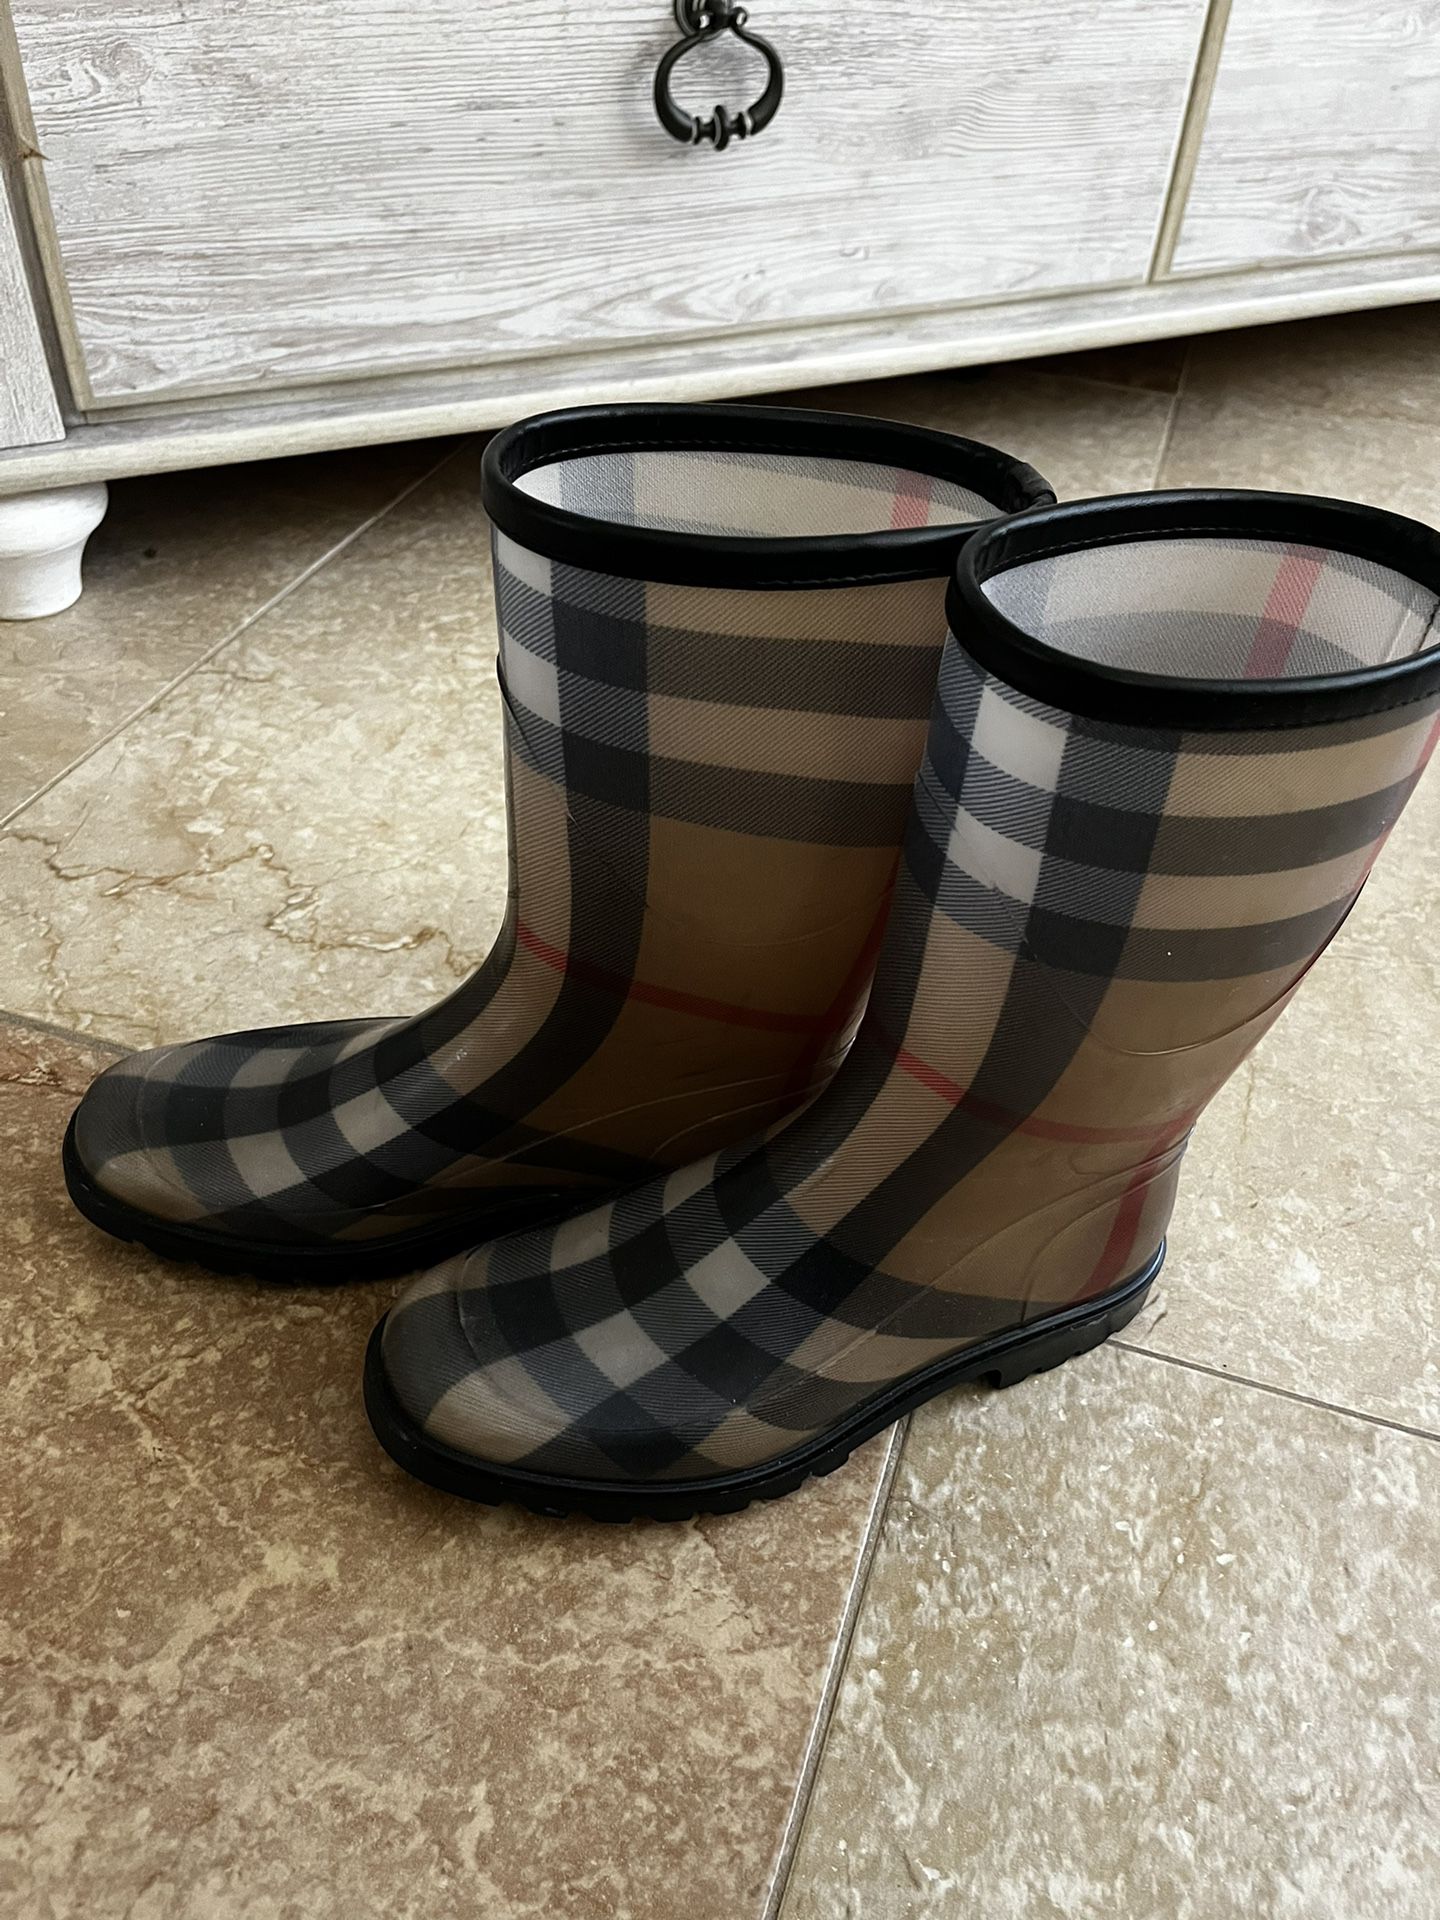 Burberry Rain Boots 